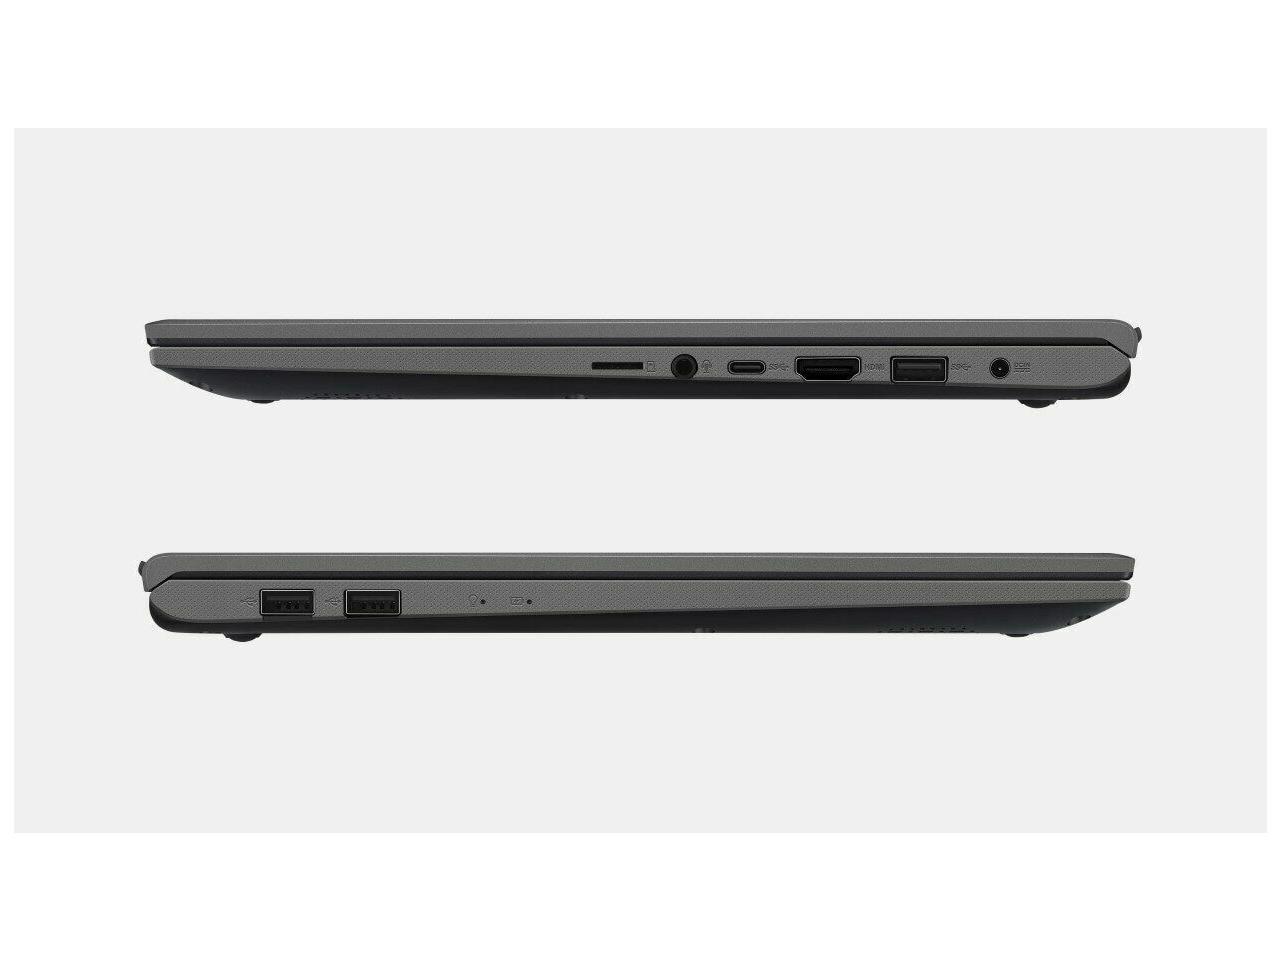 Newest Asus VivoBook 15 R564DA-UH72T 15.6" FHD Touchscreen Premium Laptop, AMD Ryzen 7 3700U, 12GB RAM, 1TB PCIe SSD Boot + 2TB HDD, Backlit Keyboard, Fingerprint Reader, Windows 10 Home, Gray